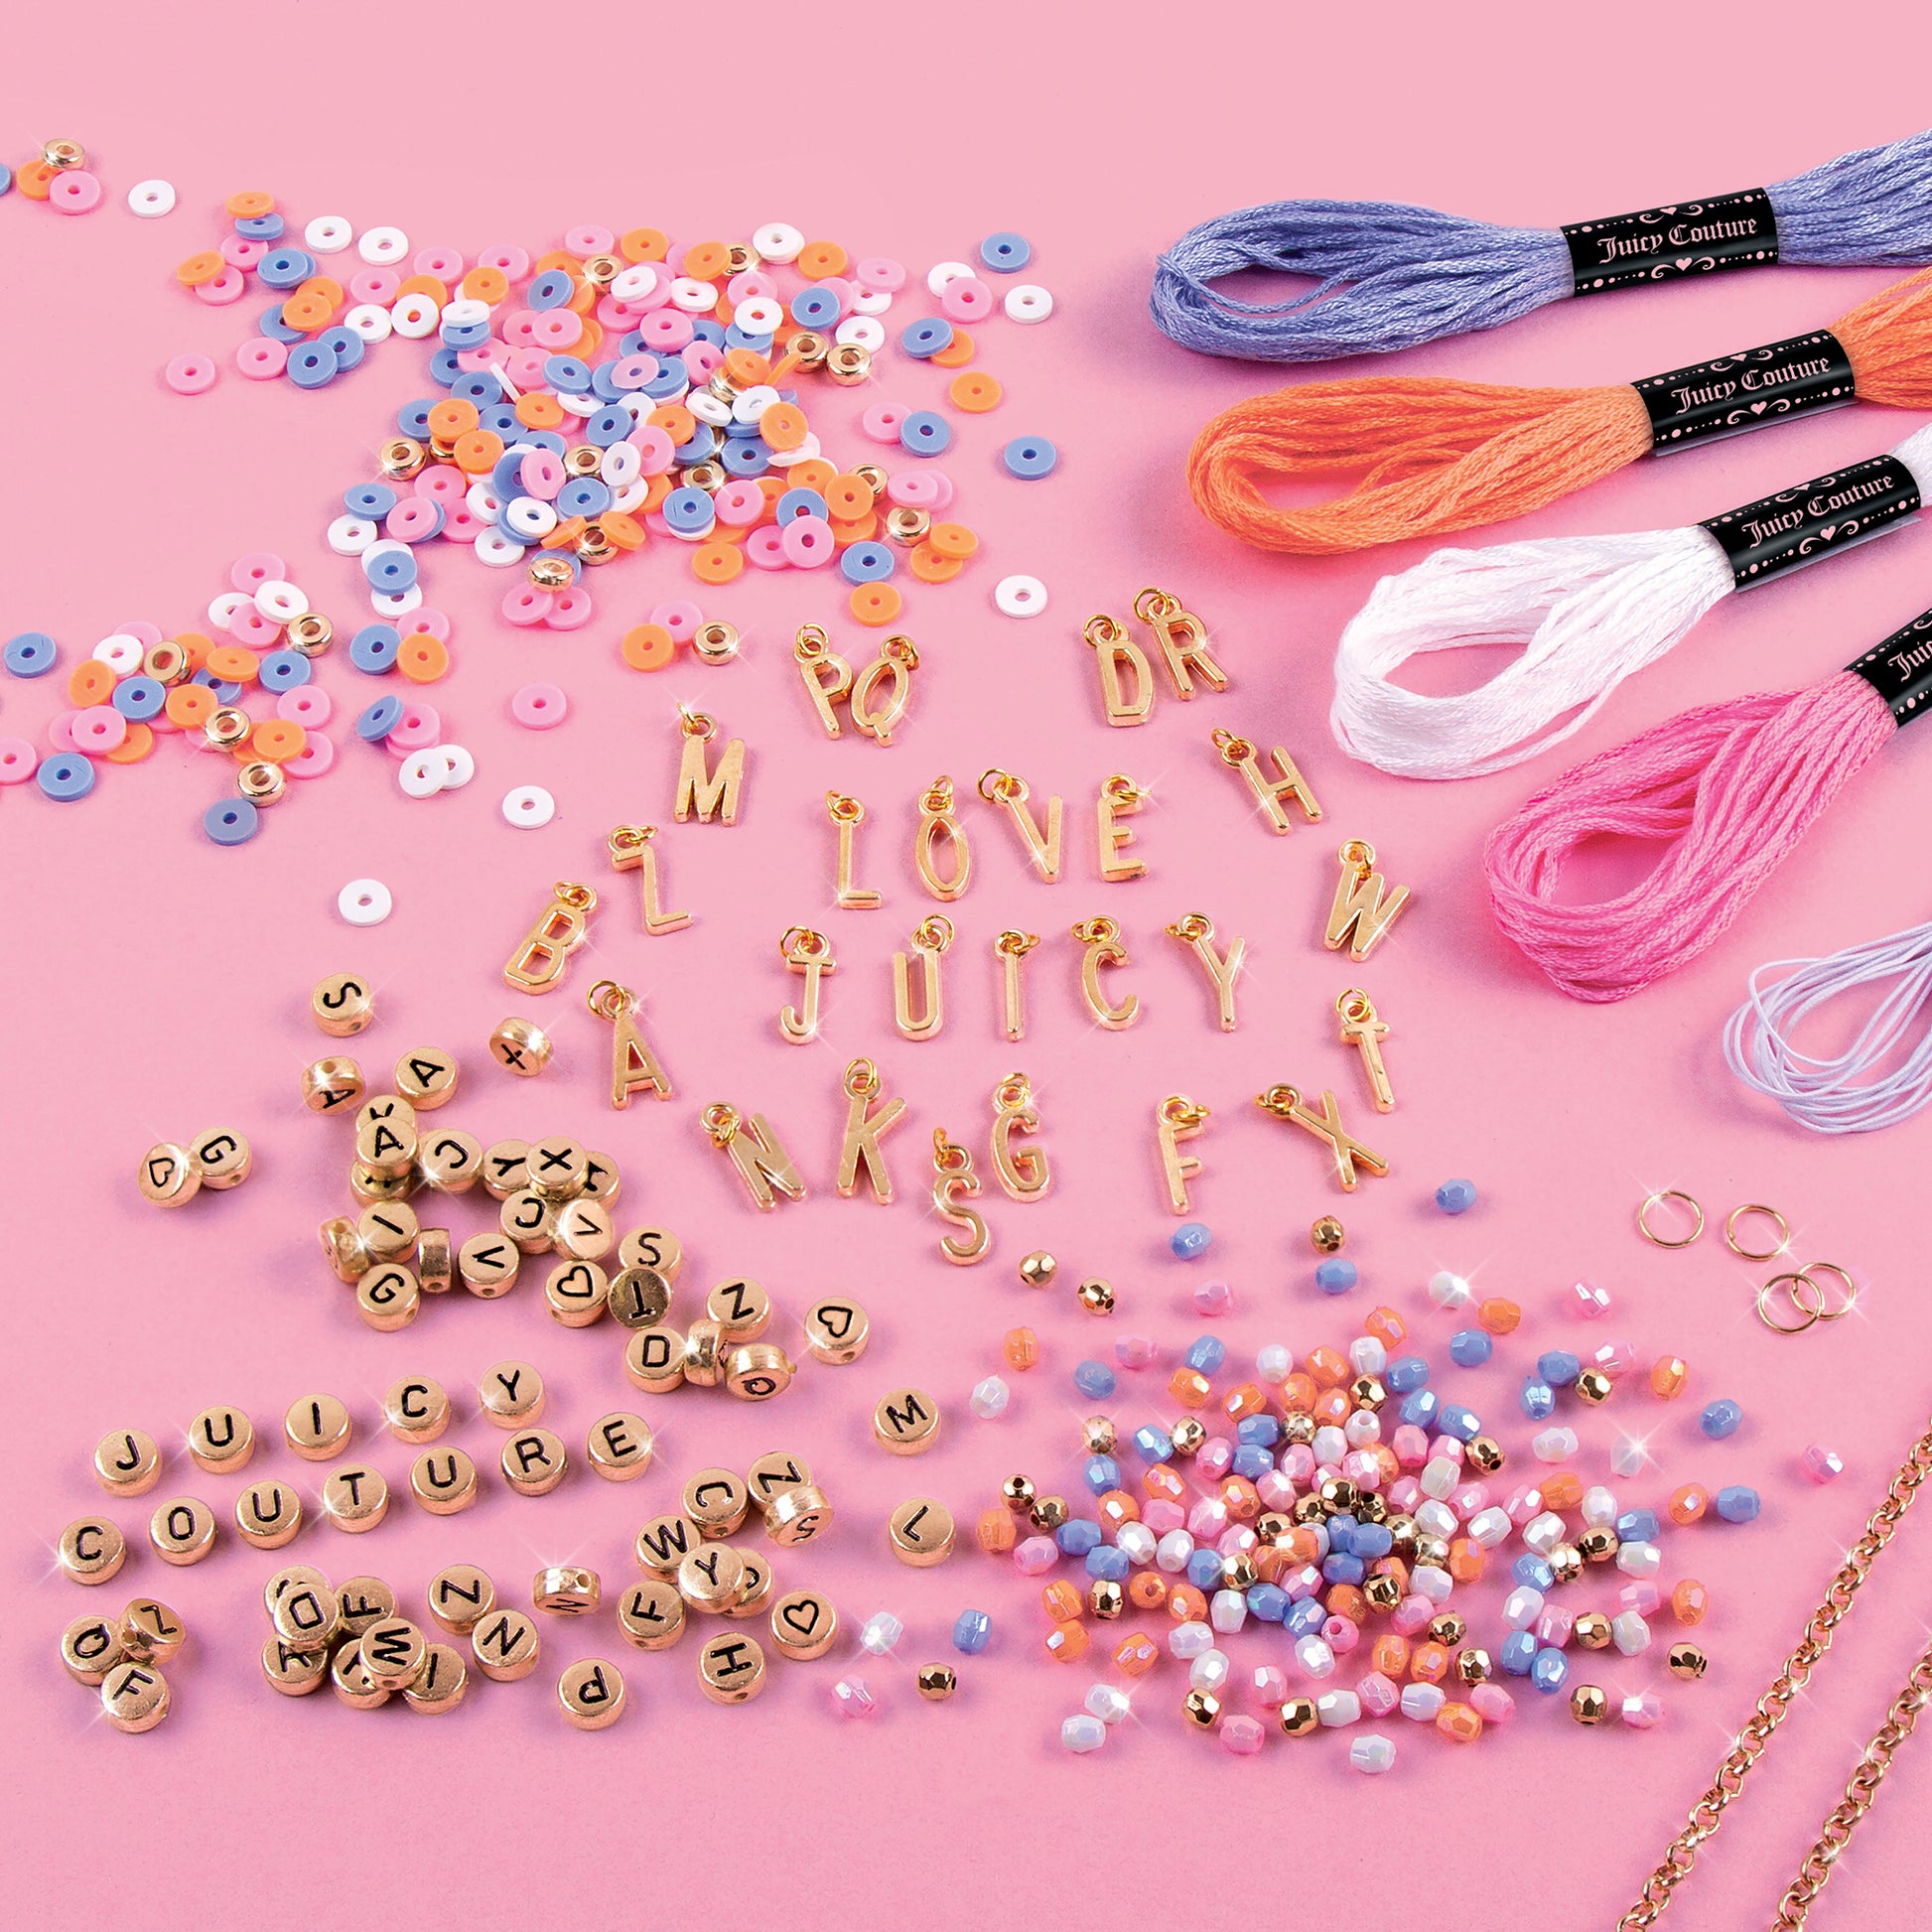 Make It Real™ Juicy Couture Crystal Sunshine Bracelets Kit